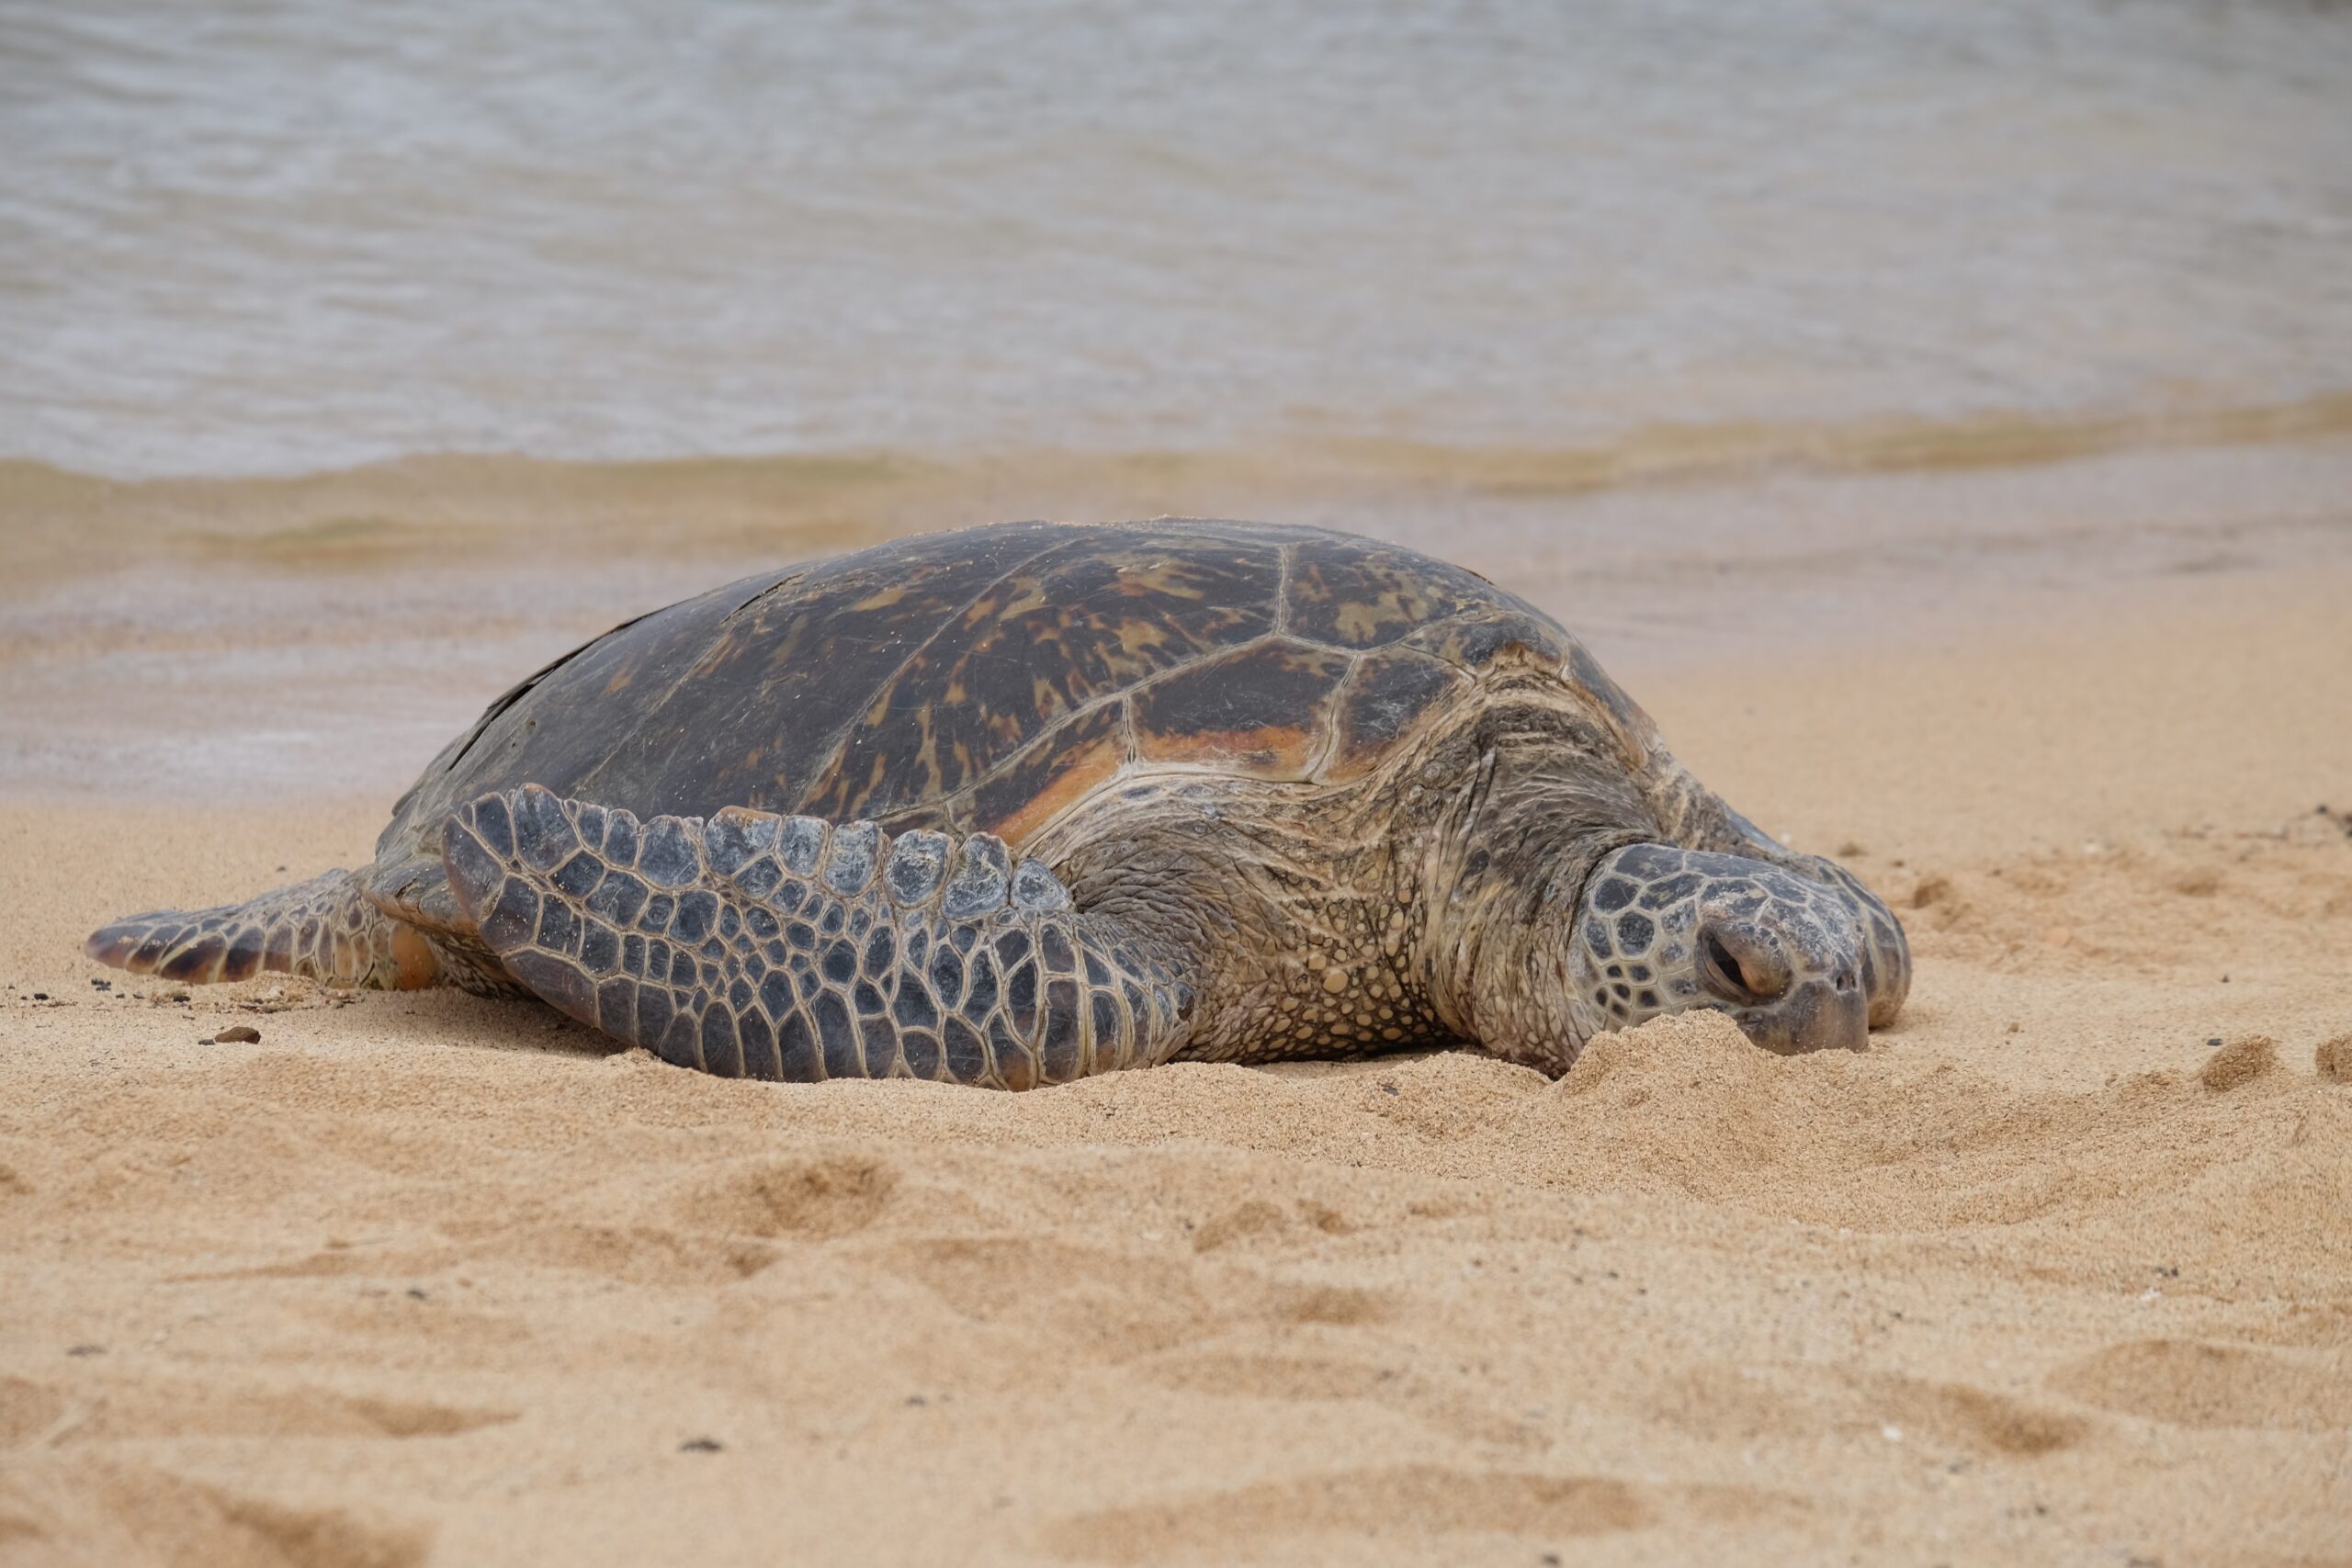 Drowned Sea Turtle Displays Dangers of Traps